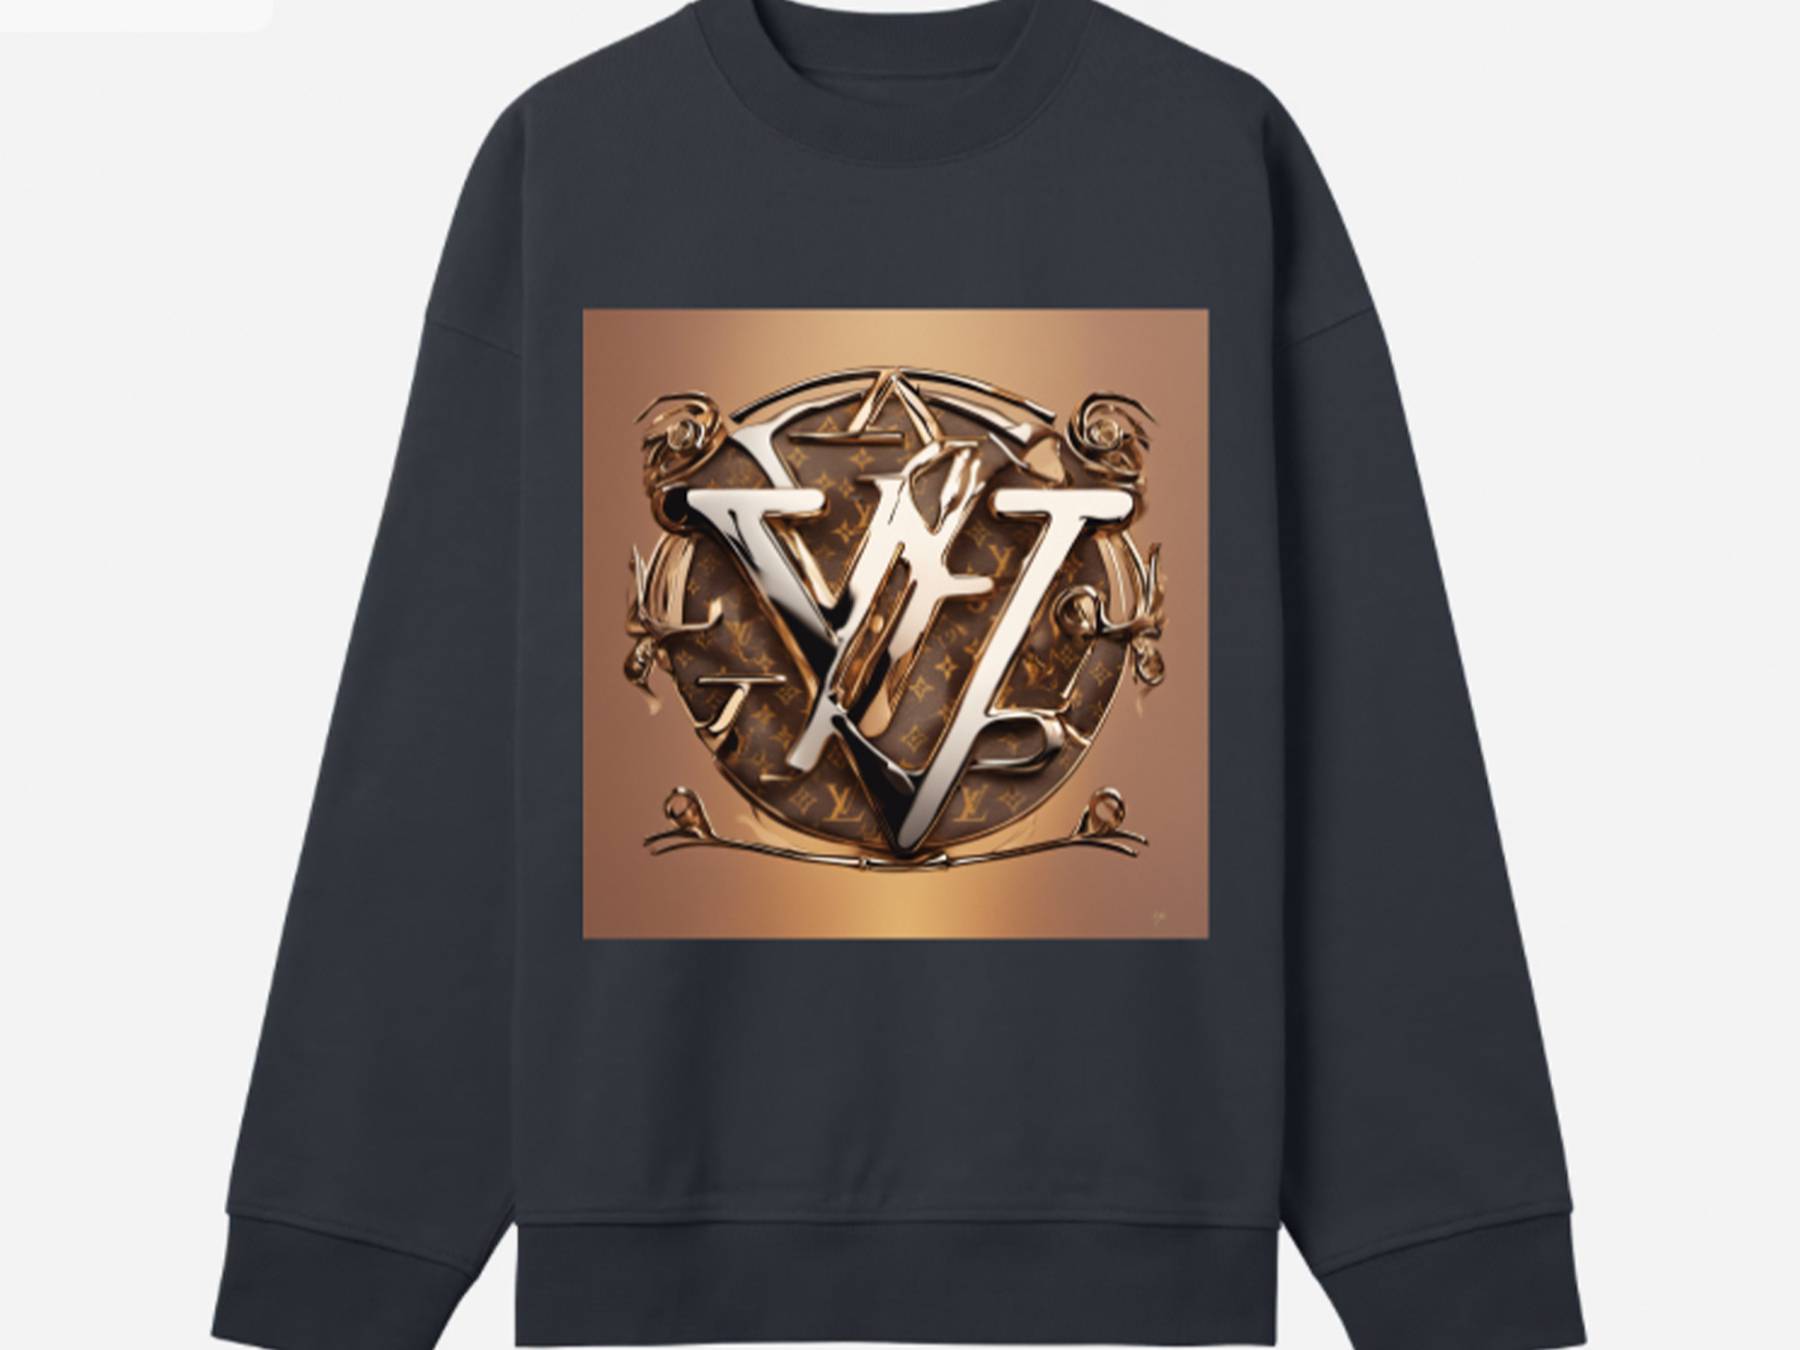 Louis Vuitton T-Shirt AI